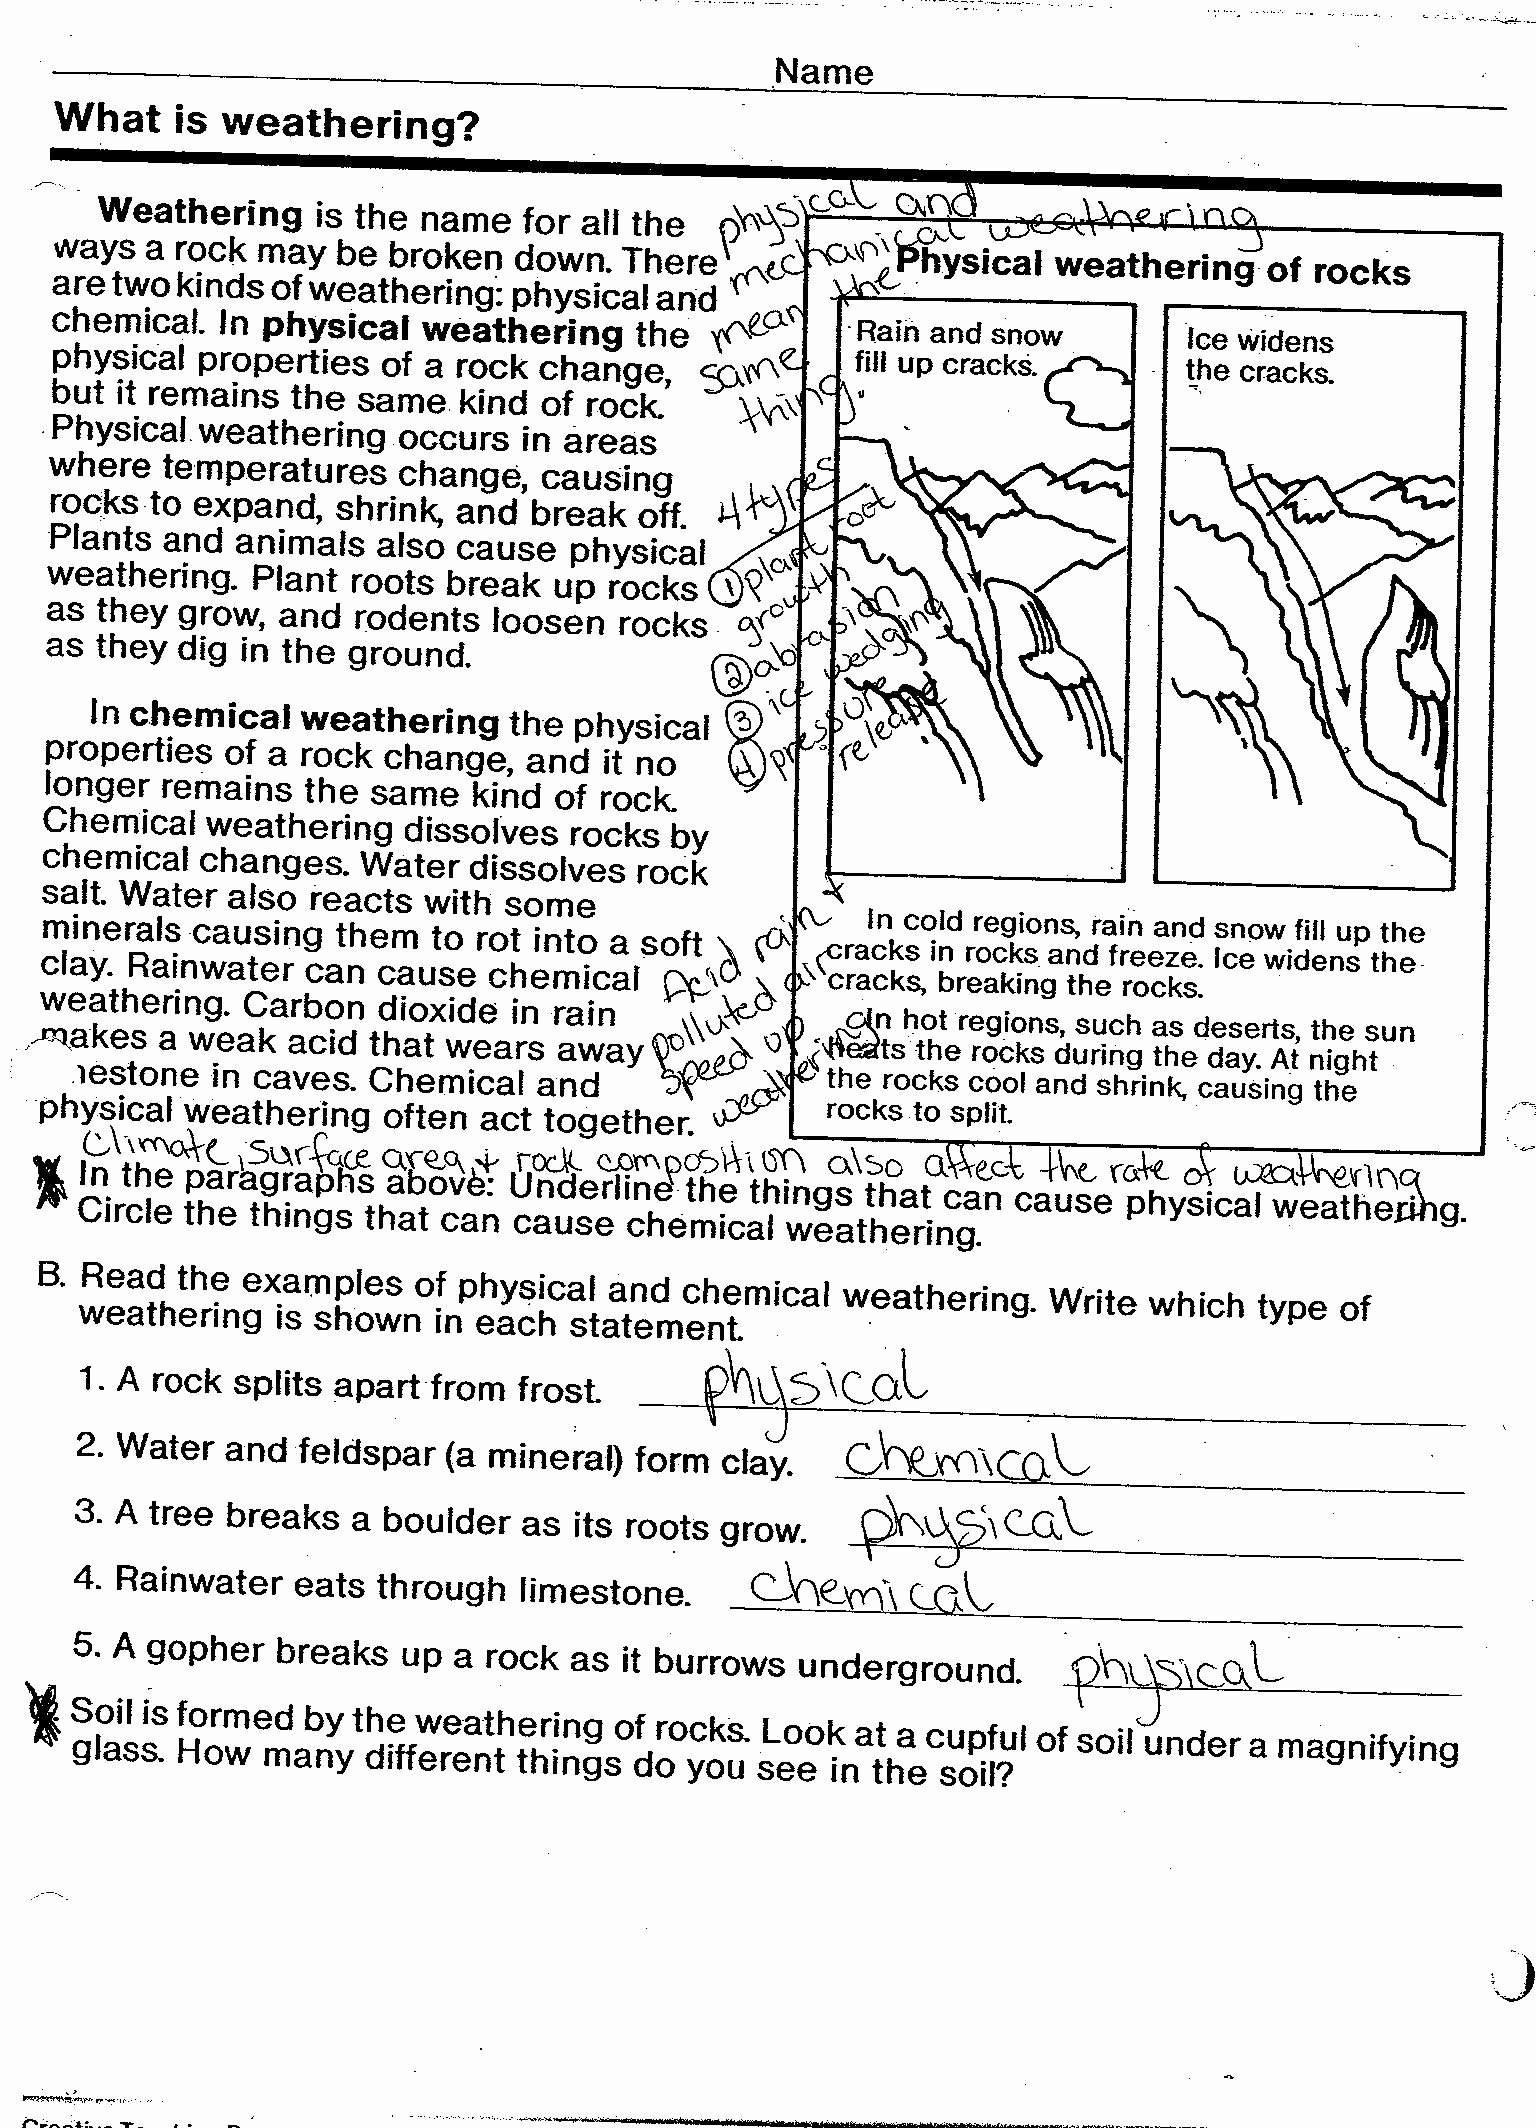 Weathering Erosion and Deposition Worksheet Best Of Weathering Erosion and Deposition Worksheets